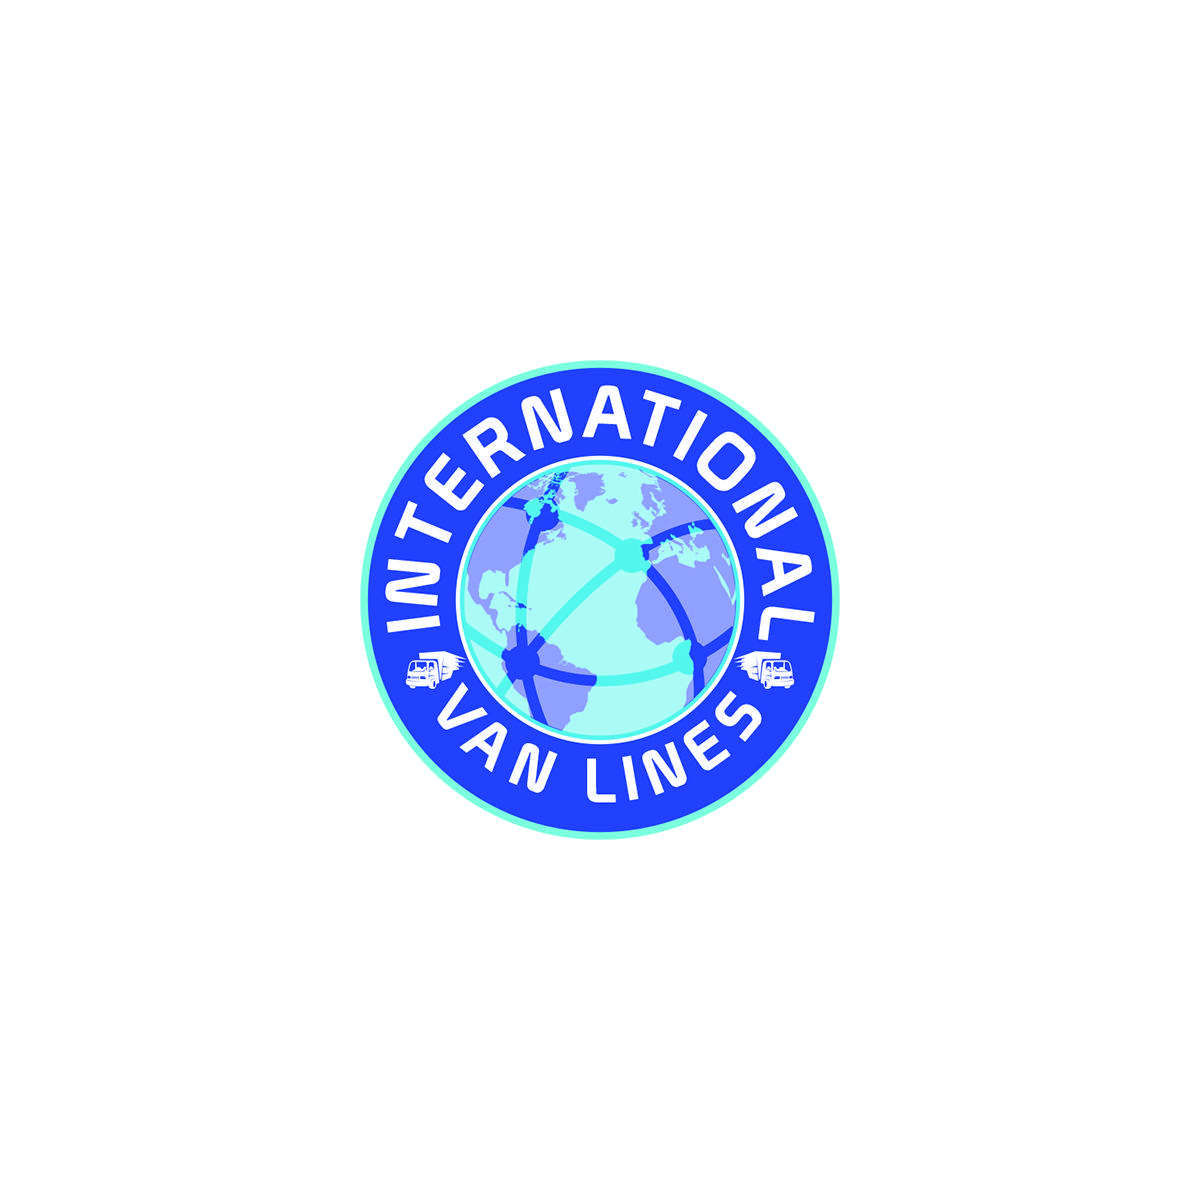 Blue Lines Company Logo - Modern, Professional, Moving Company Logo Design for international ...